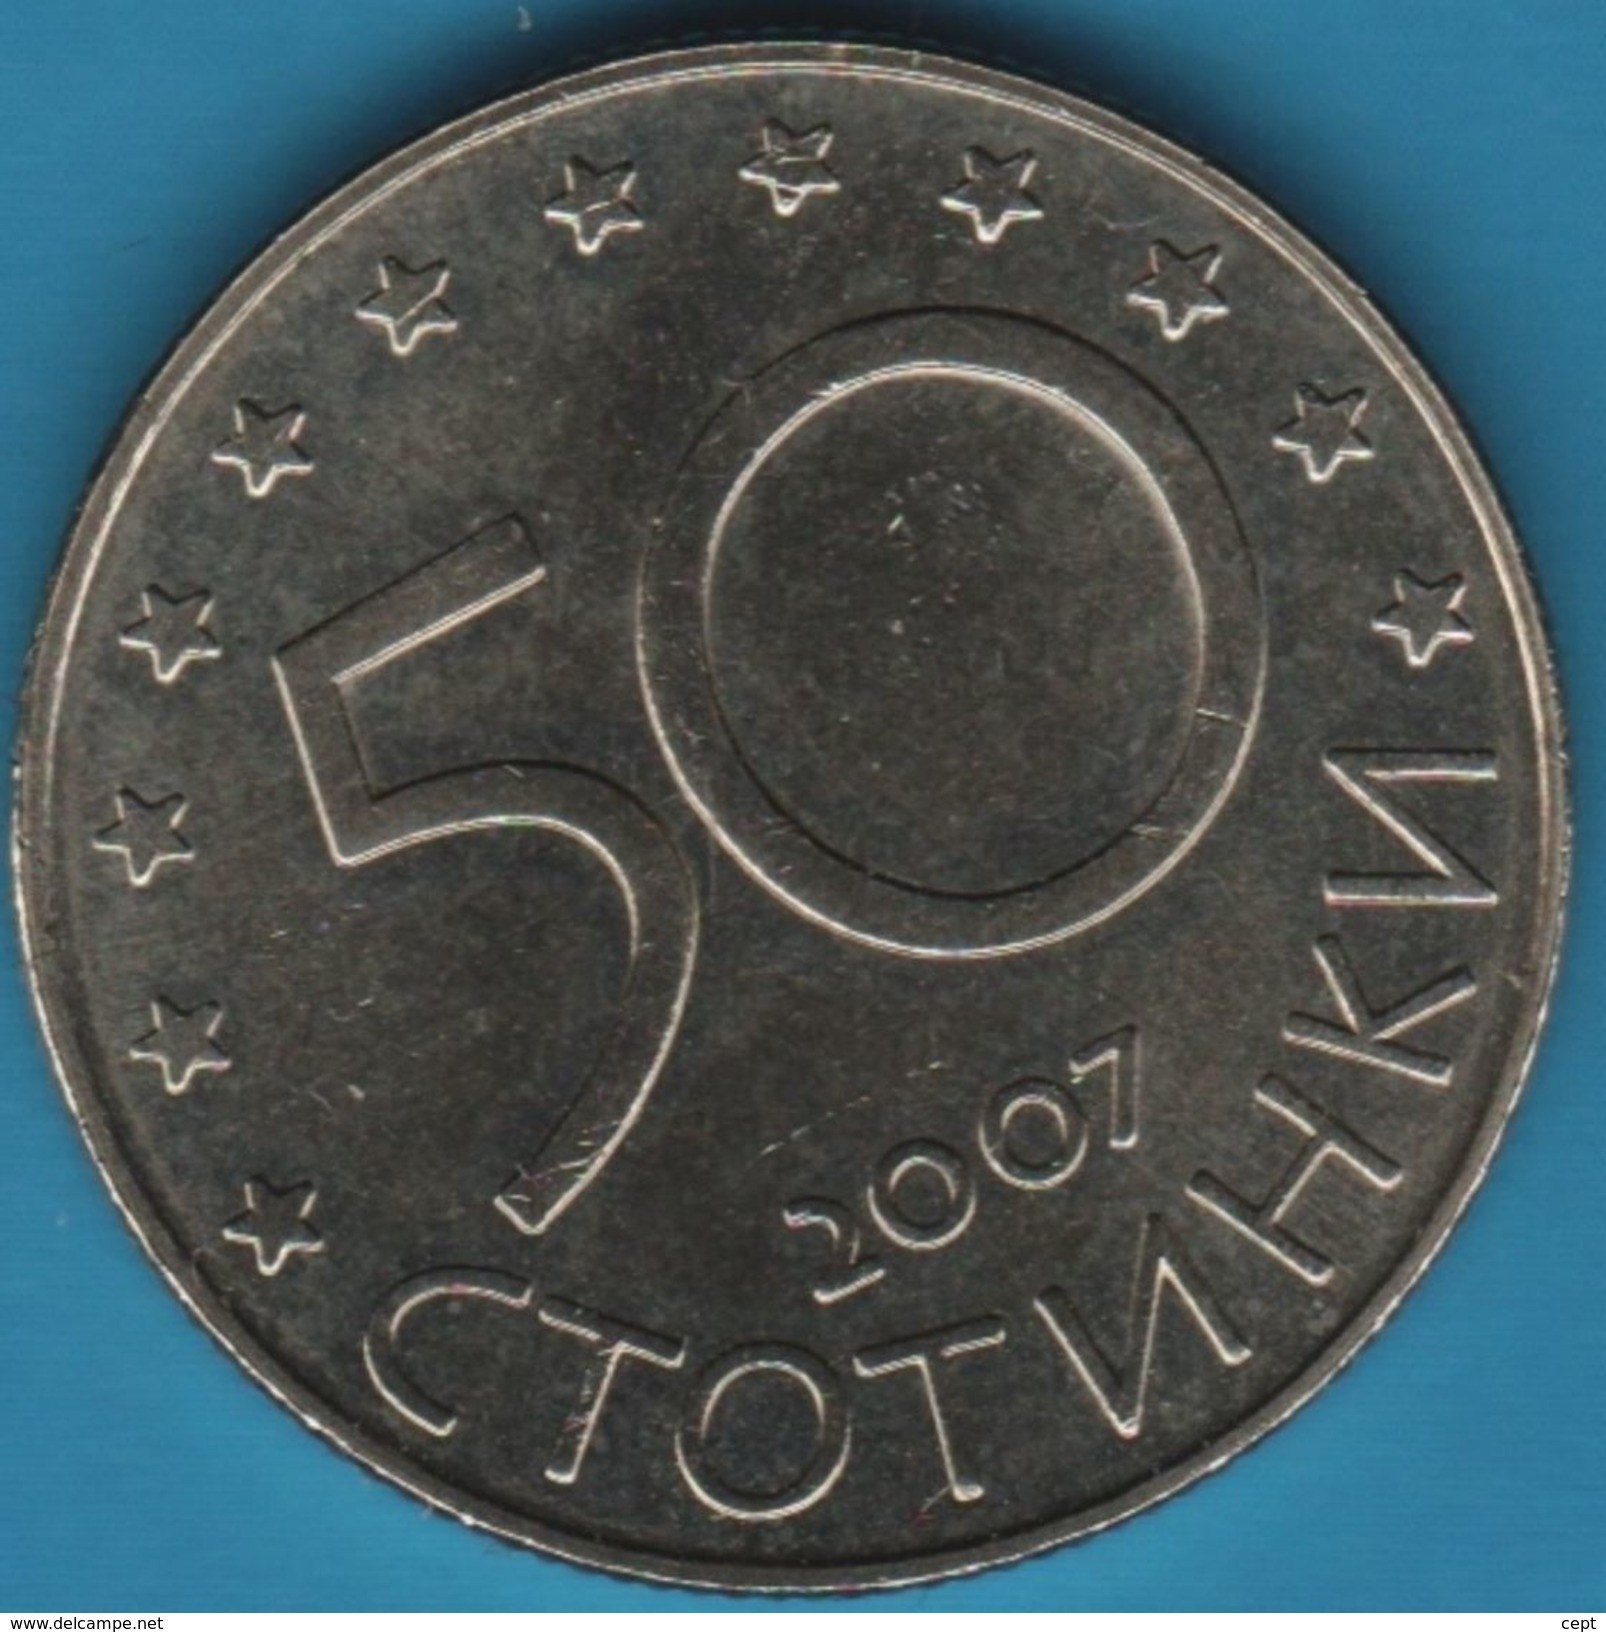 Bulgaria In EU  - 0,50 Lv - Bulgaria 2007 Year - Coin - Bulgaria